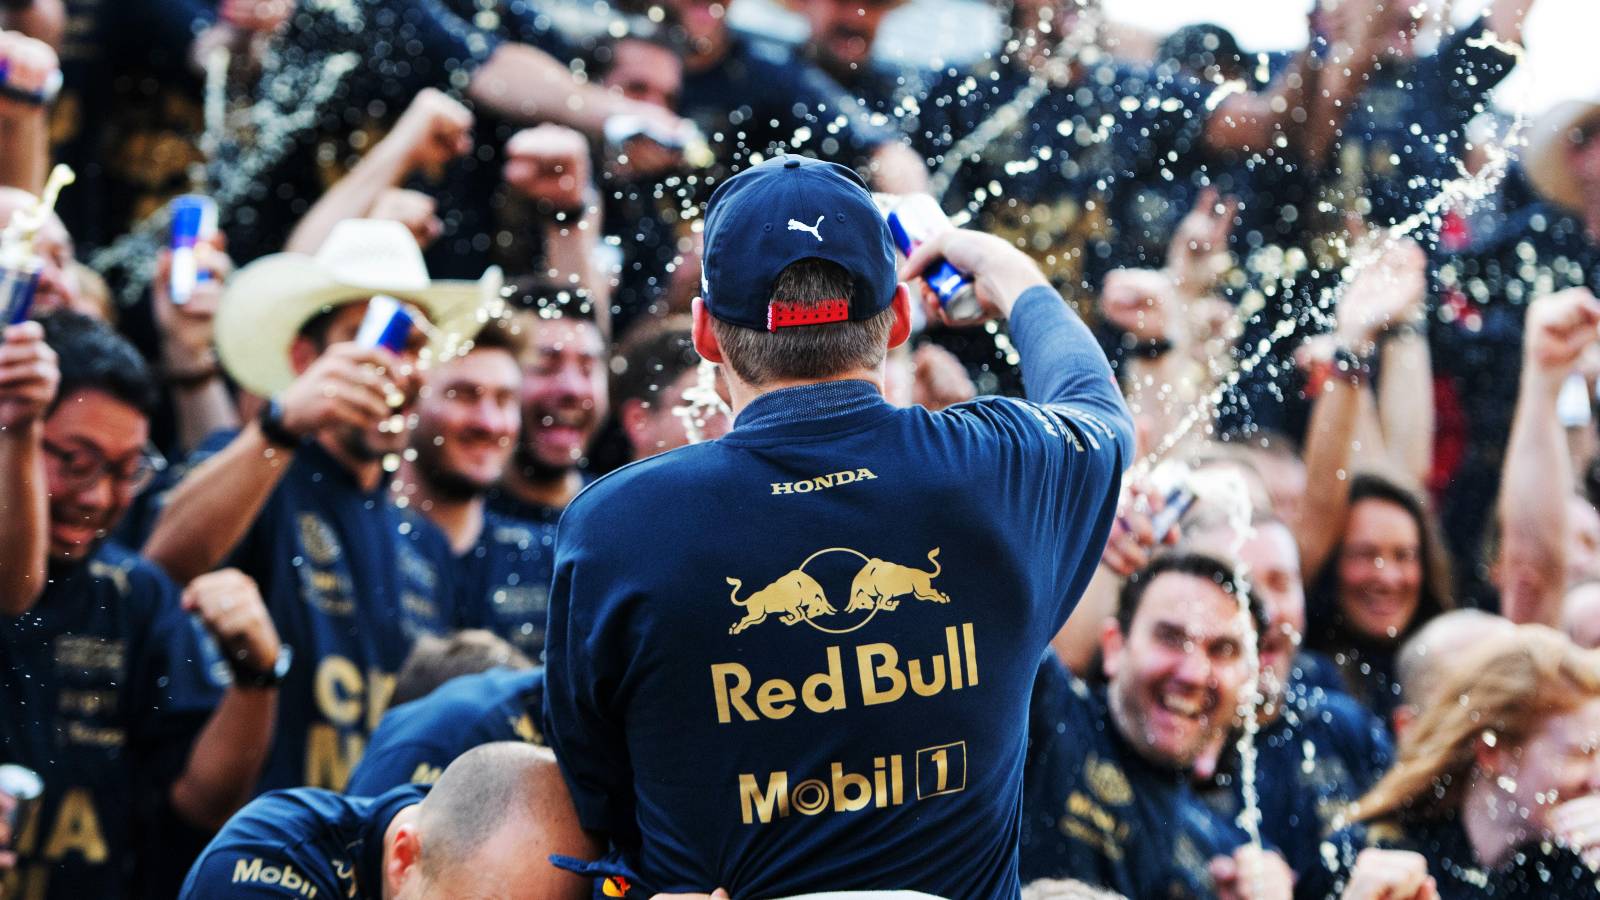 Max Verstappen sprays Red Bull in title celebration. United States, October 2022.